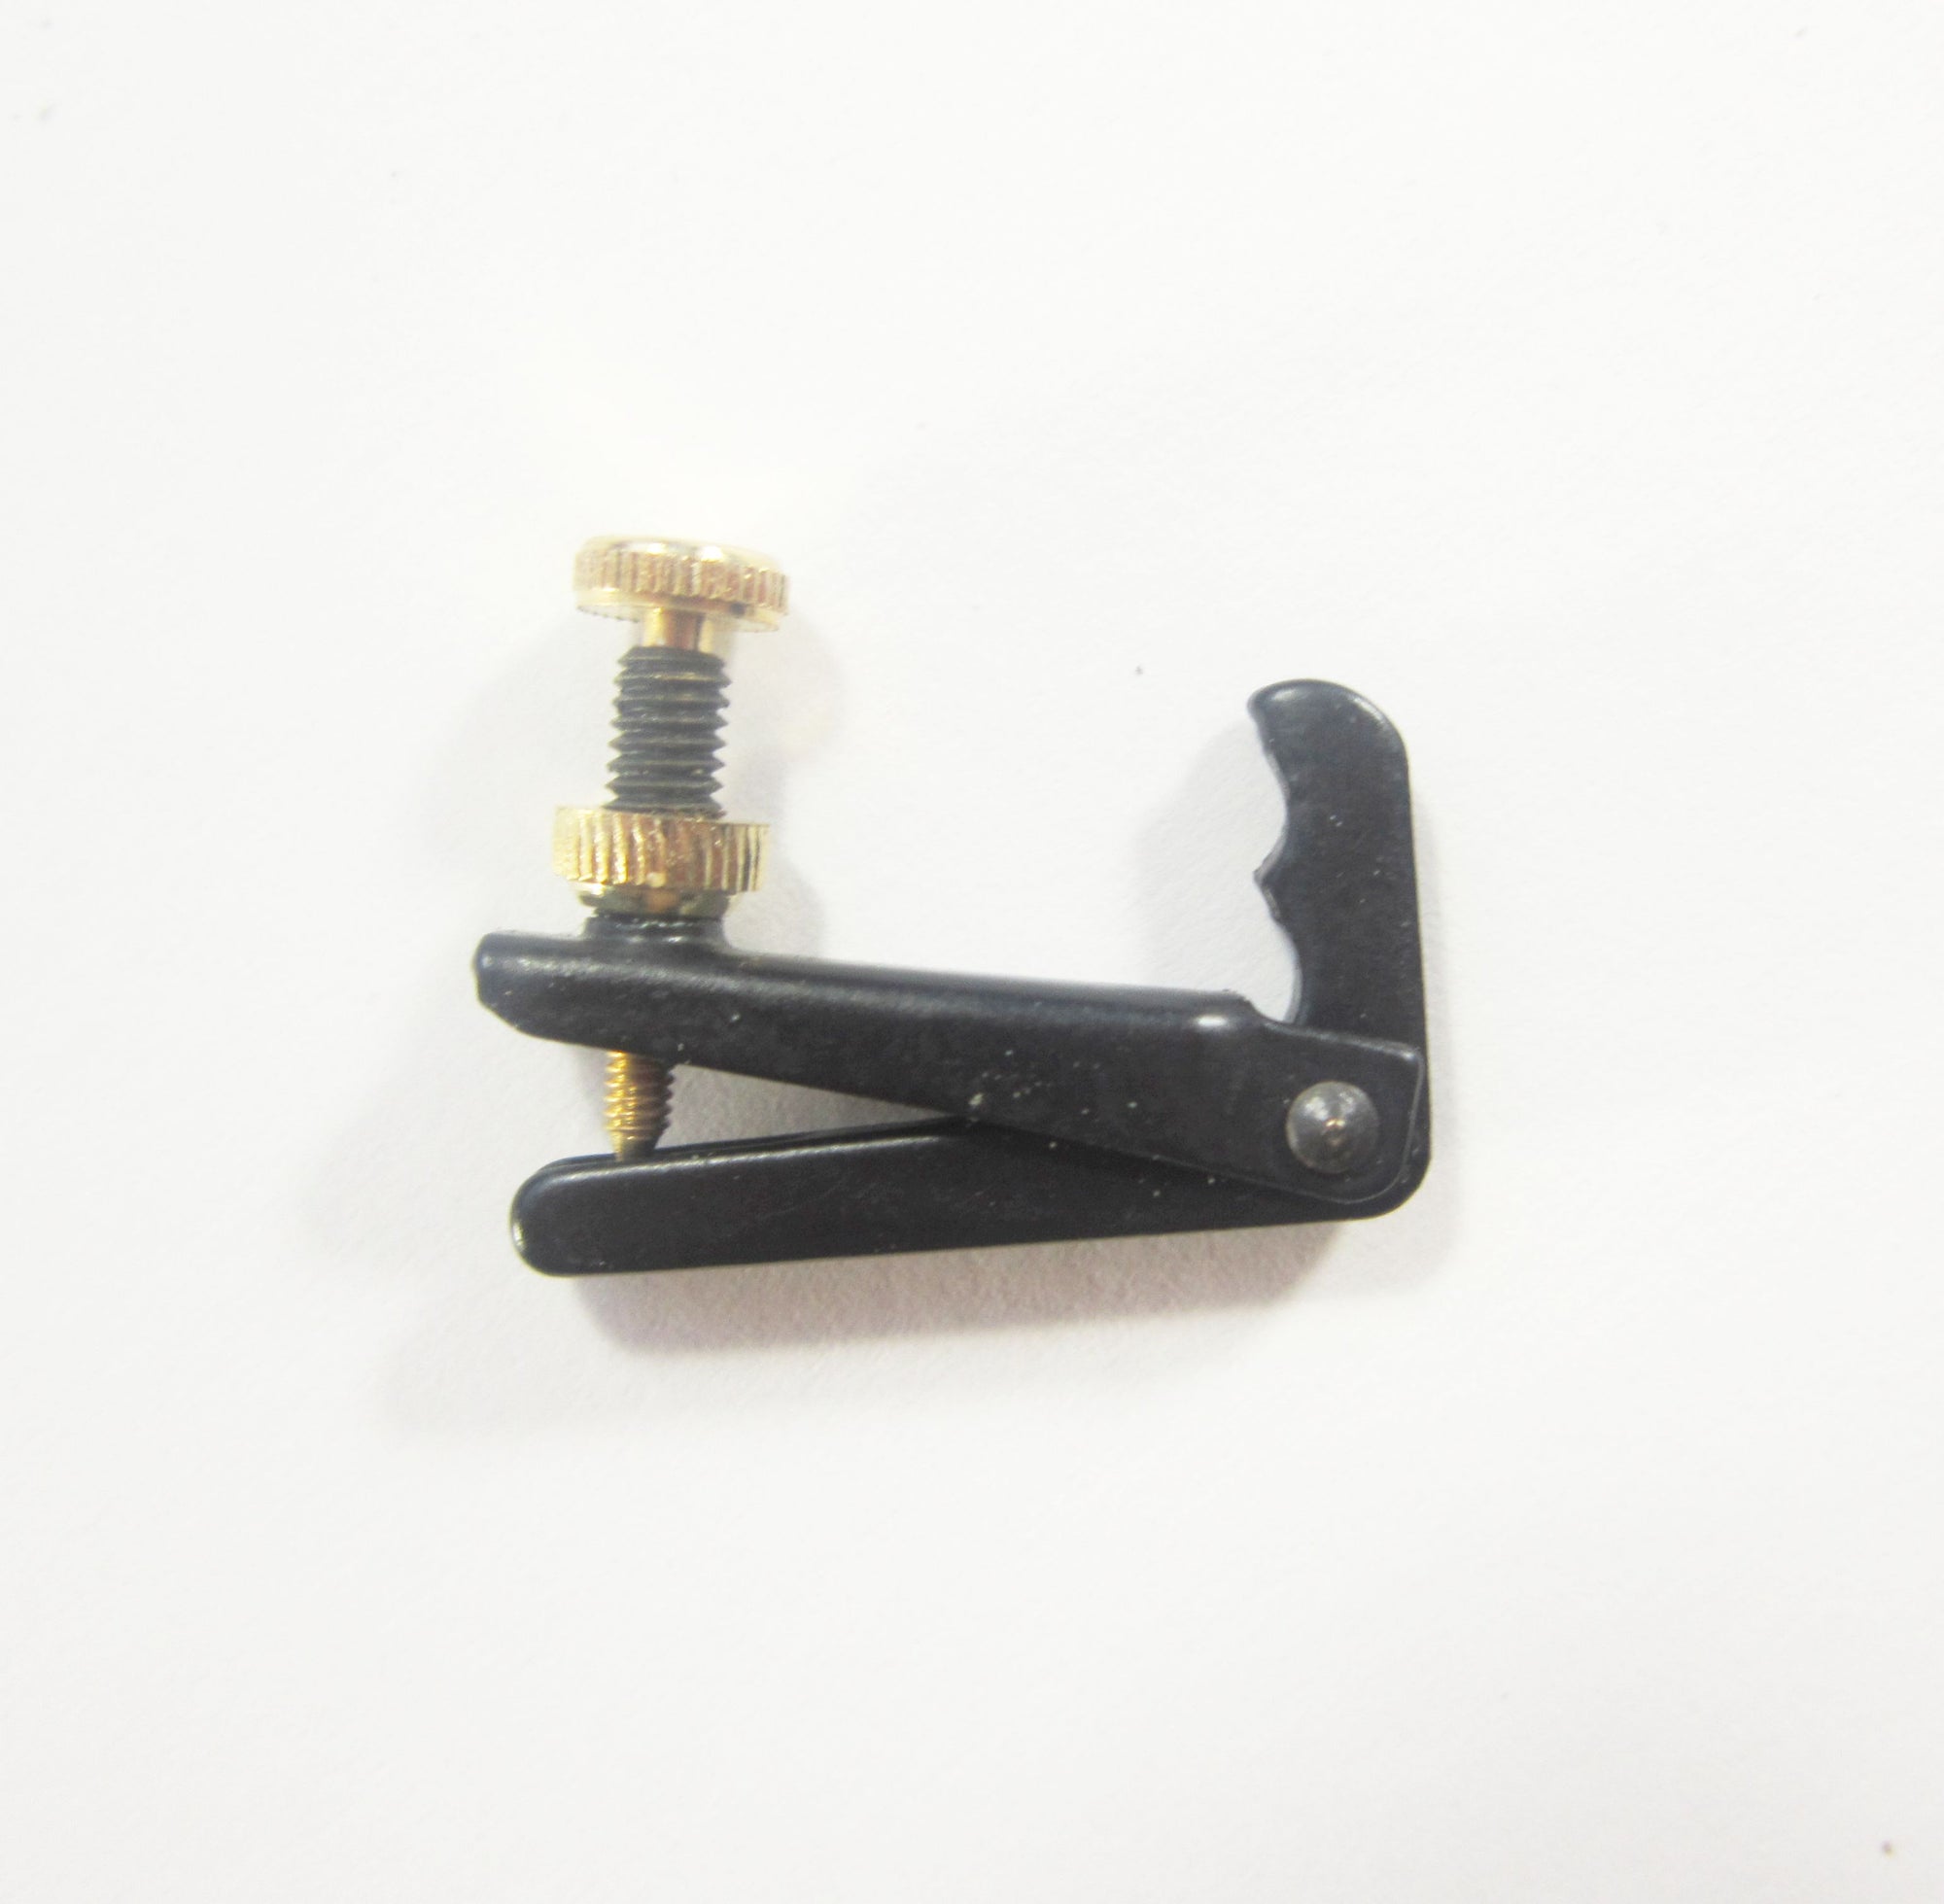 Viola fine tuner-black- gold screw